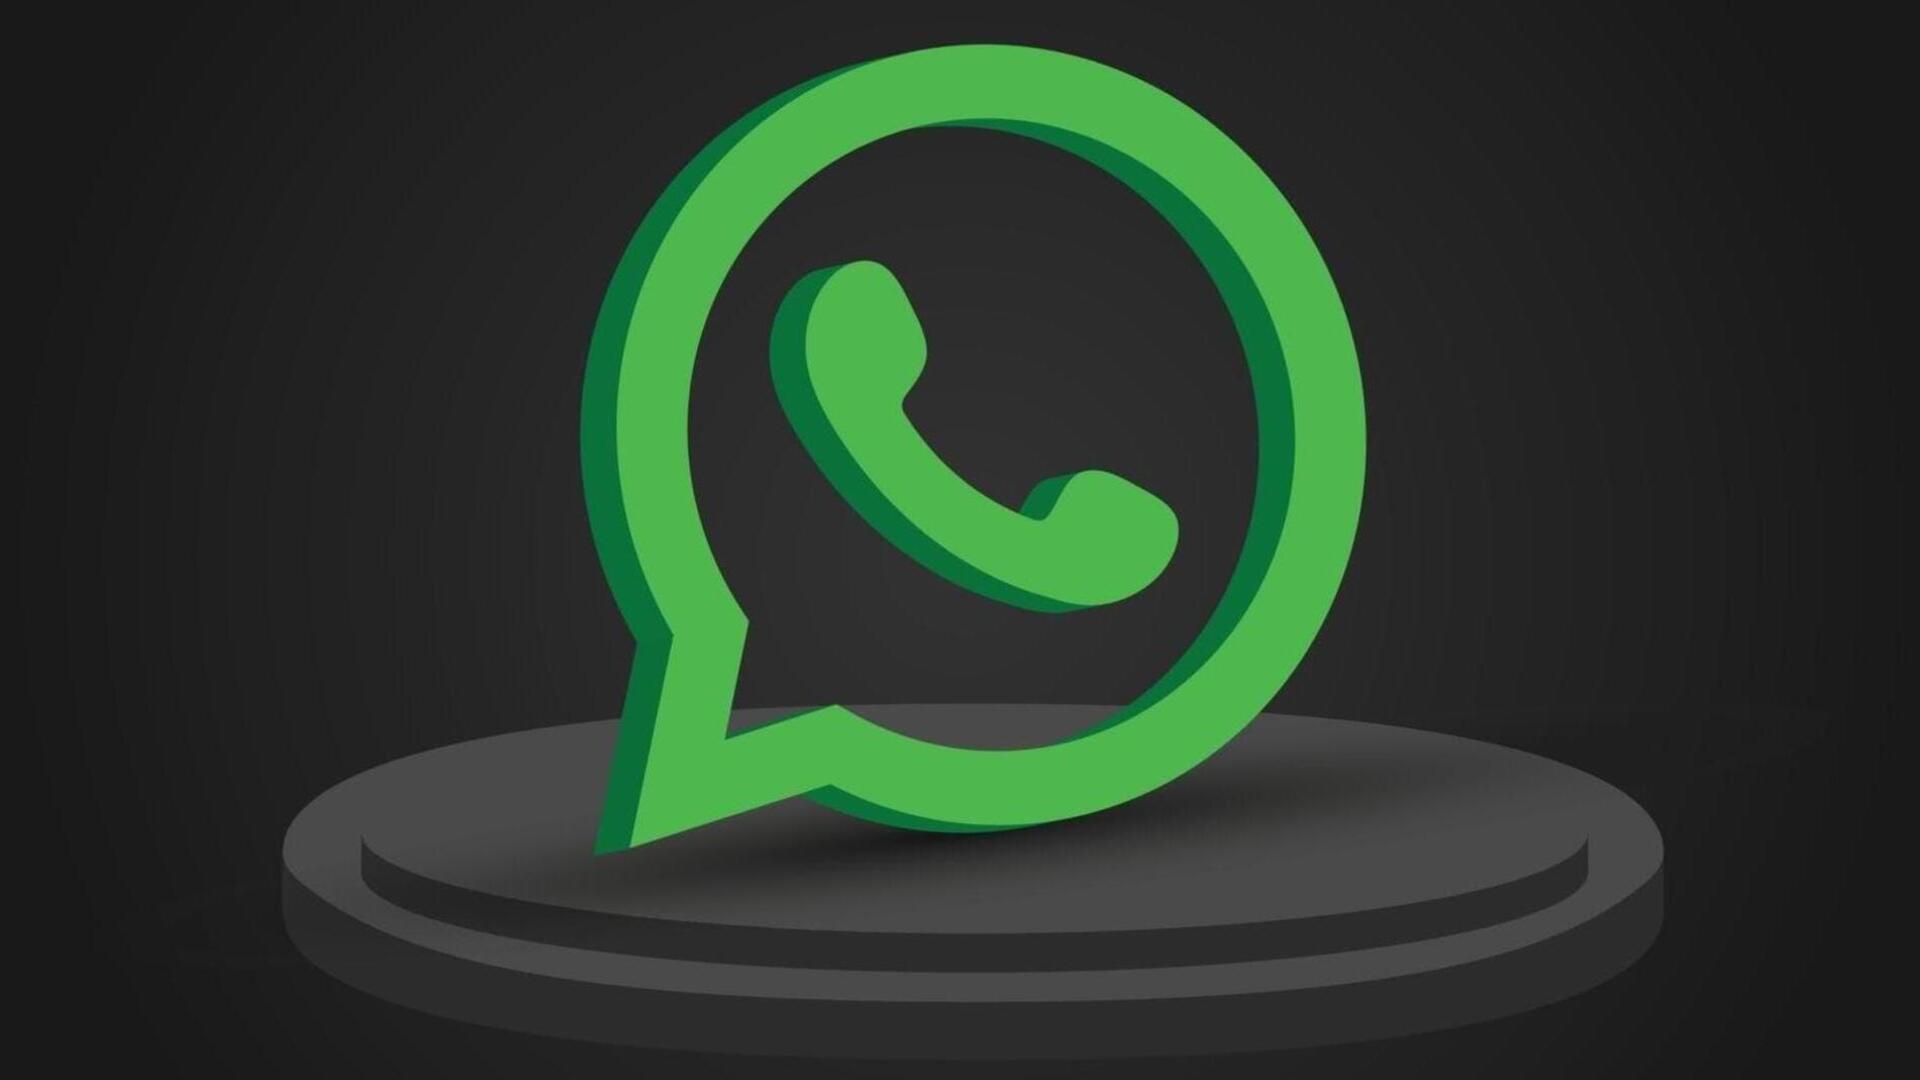 WhatsApp now allows sharing original quality photos, videos as files